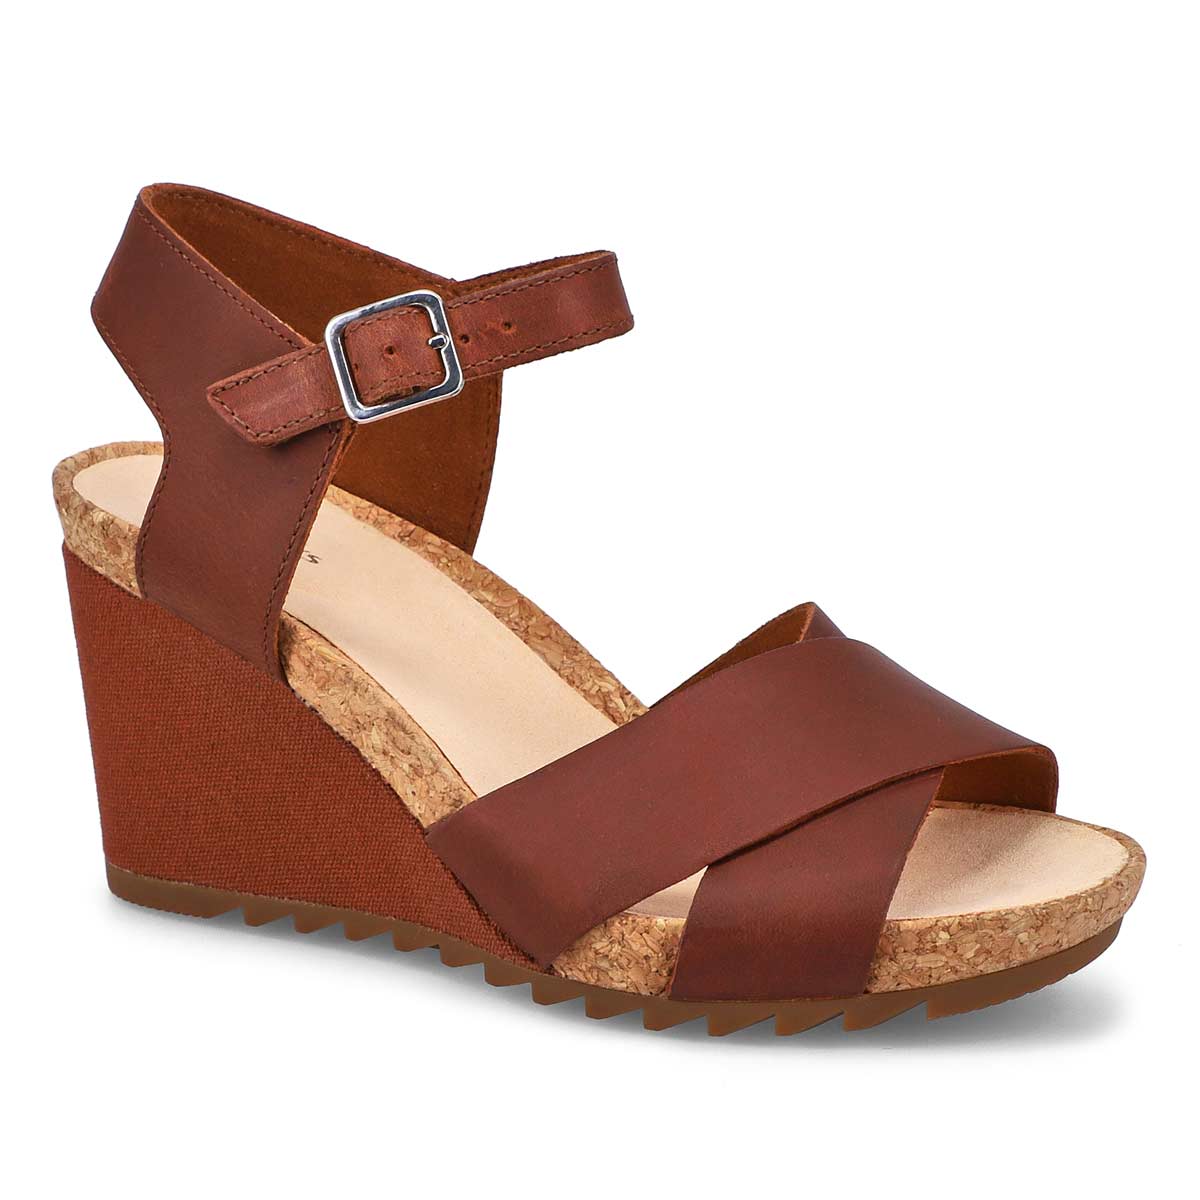 clarks women's lucia sun wedge sandals